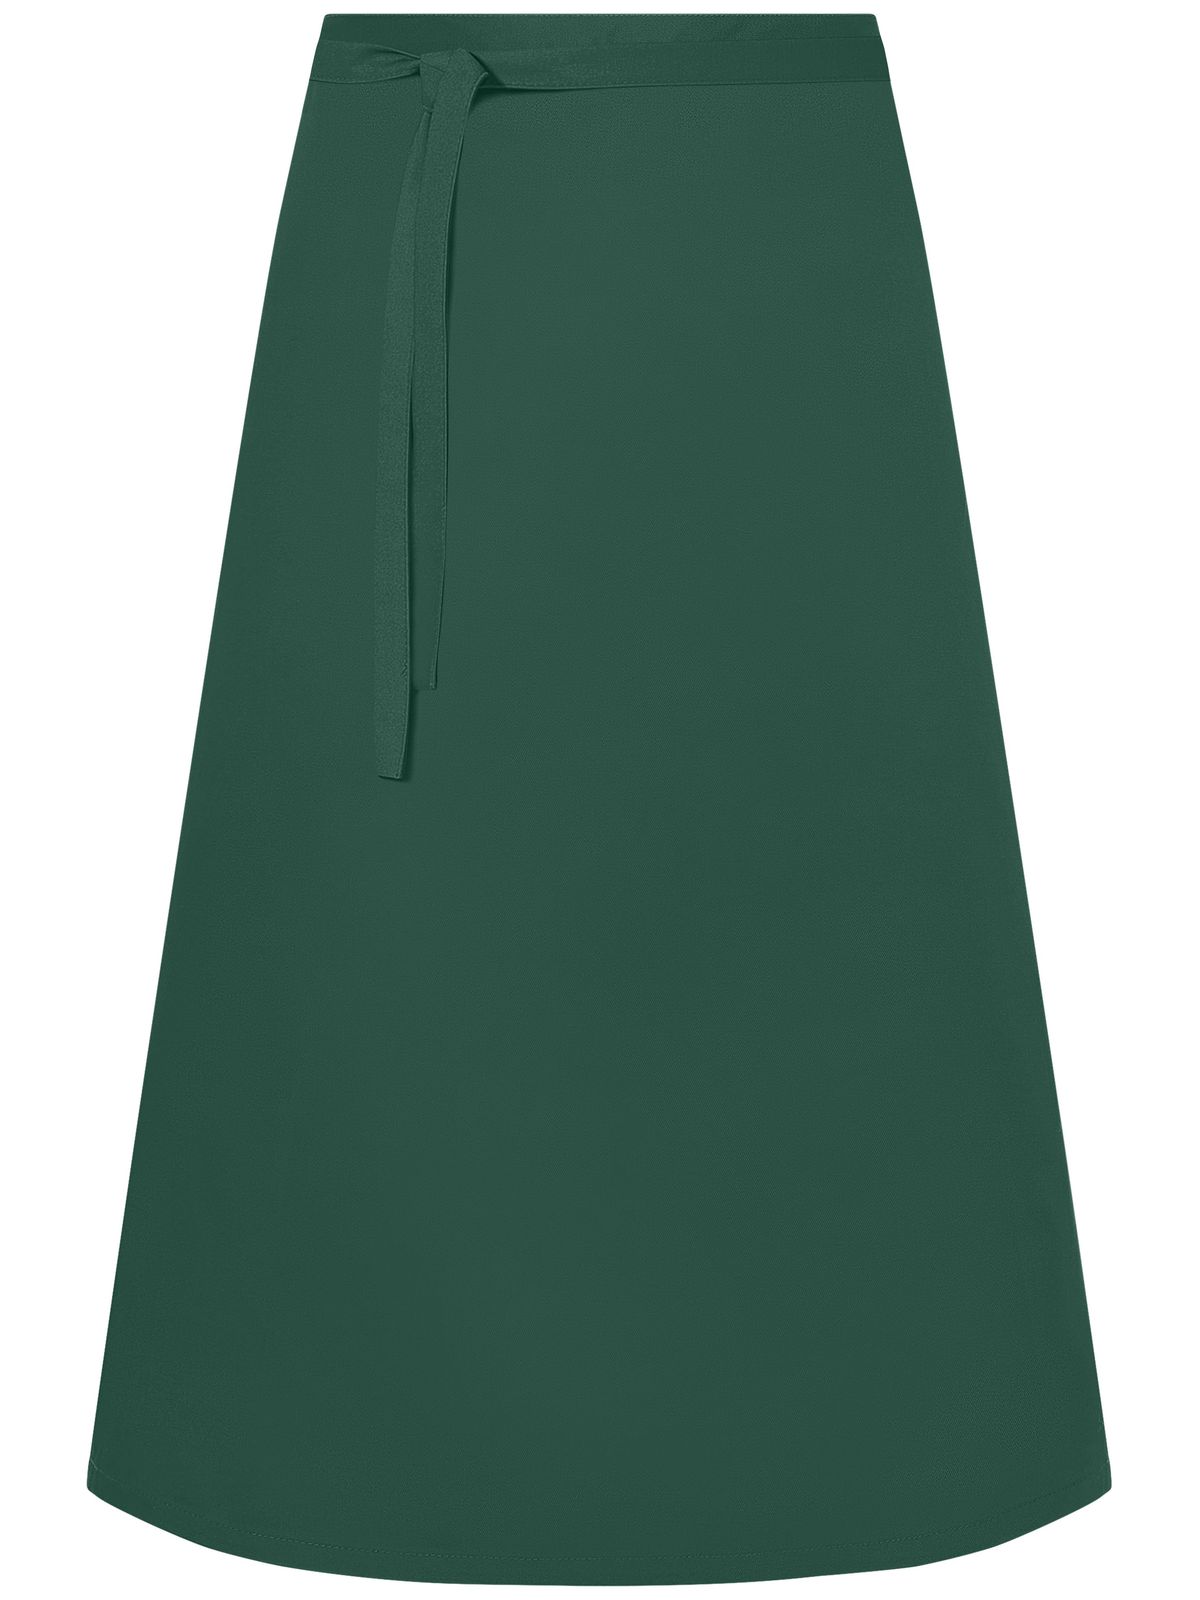 apron-long-dark-green.webp